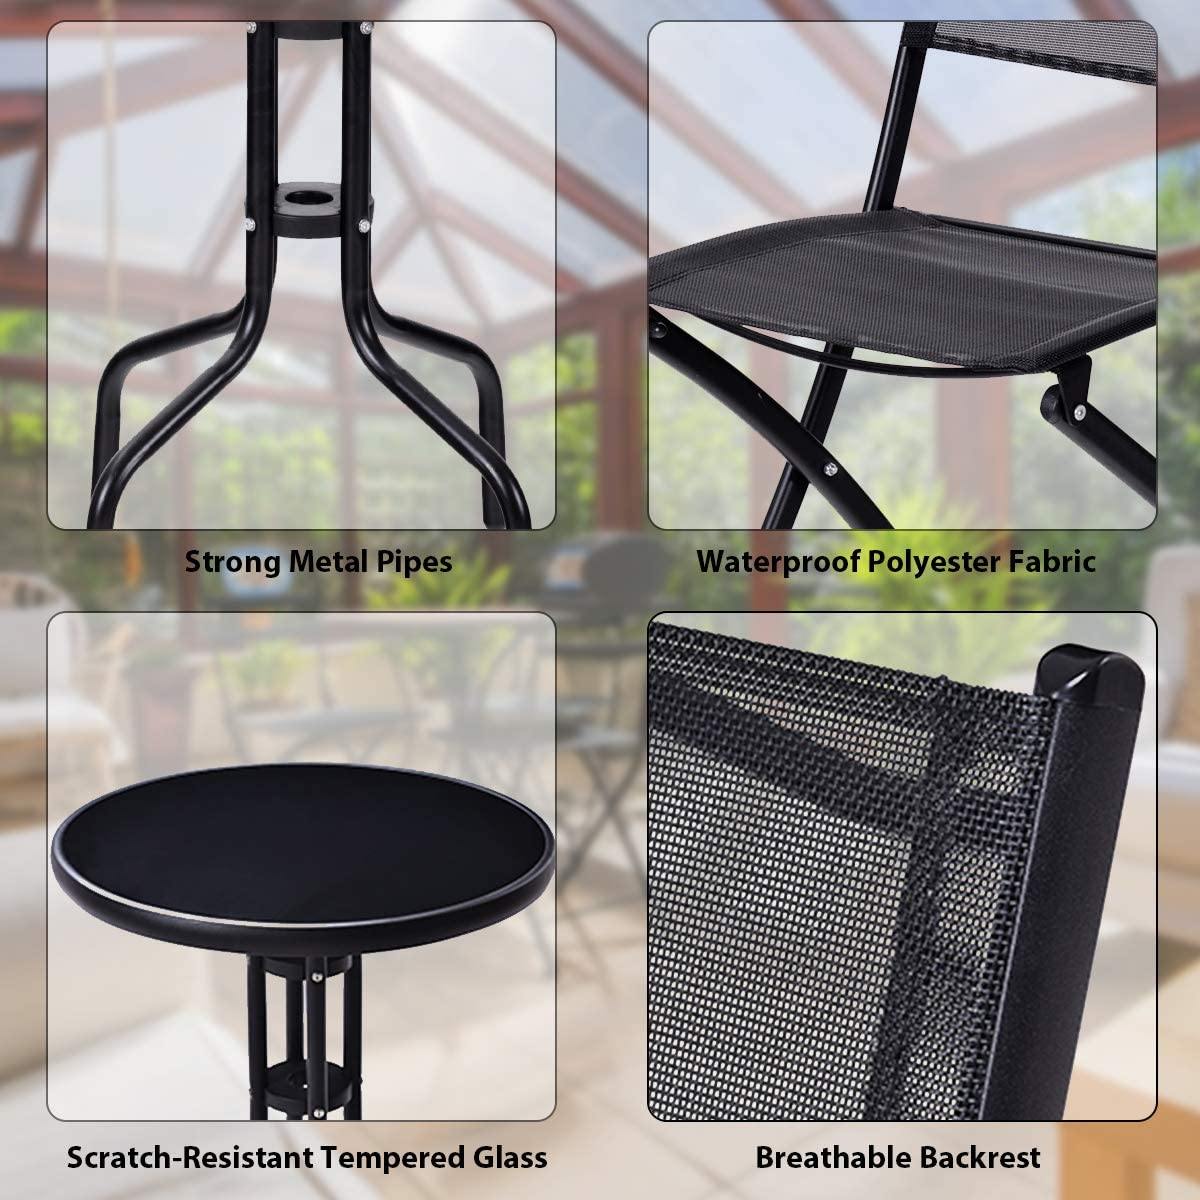 3 Pcs Bistro Set Garden Backyard Round Table Folding Chairs - Giantexus